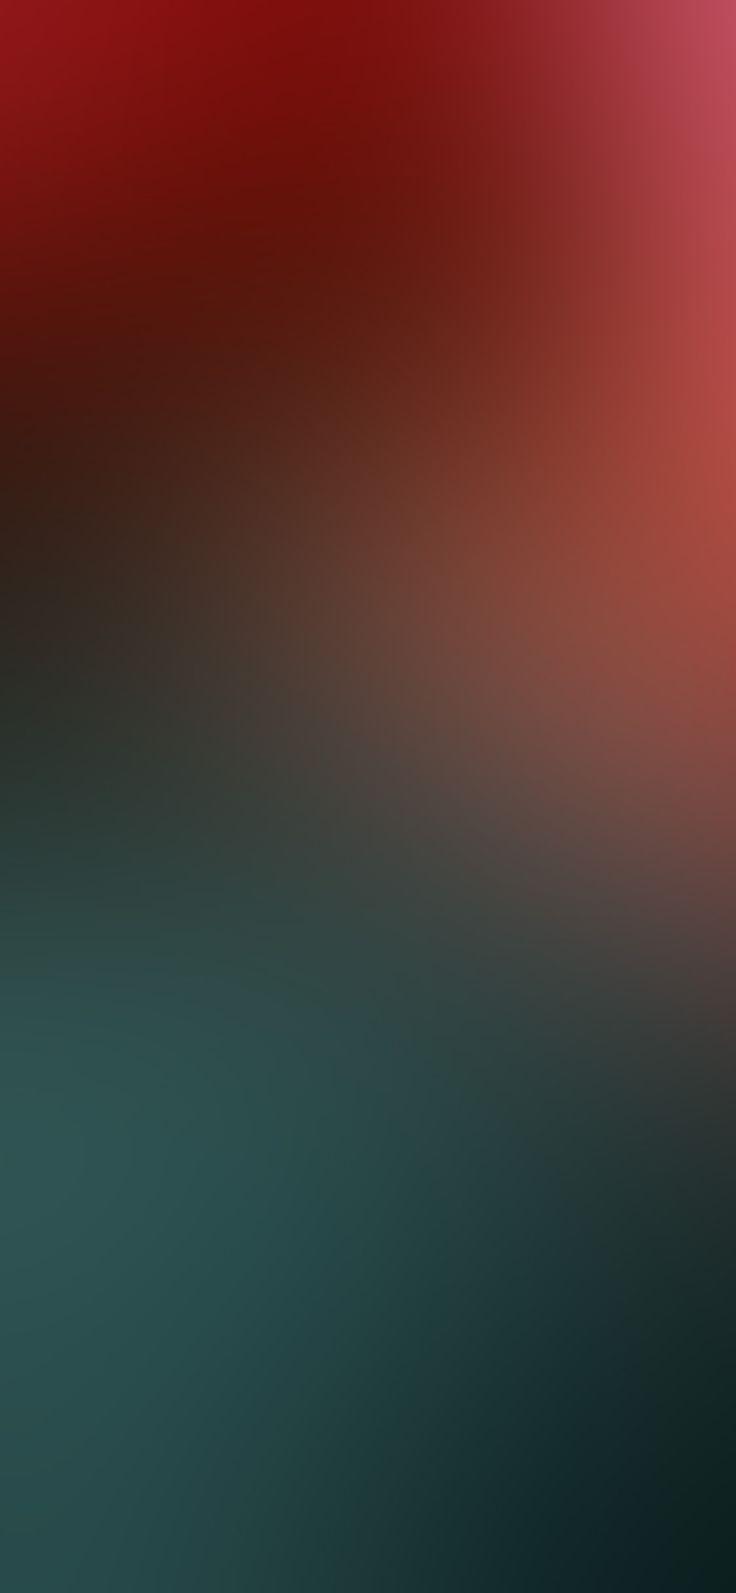 iPhone X wallpaper, red earth blur gradation